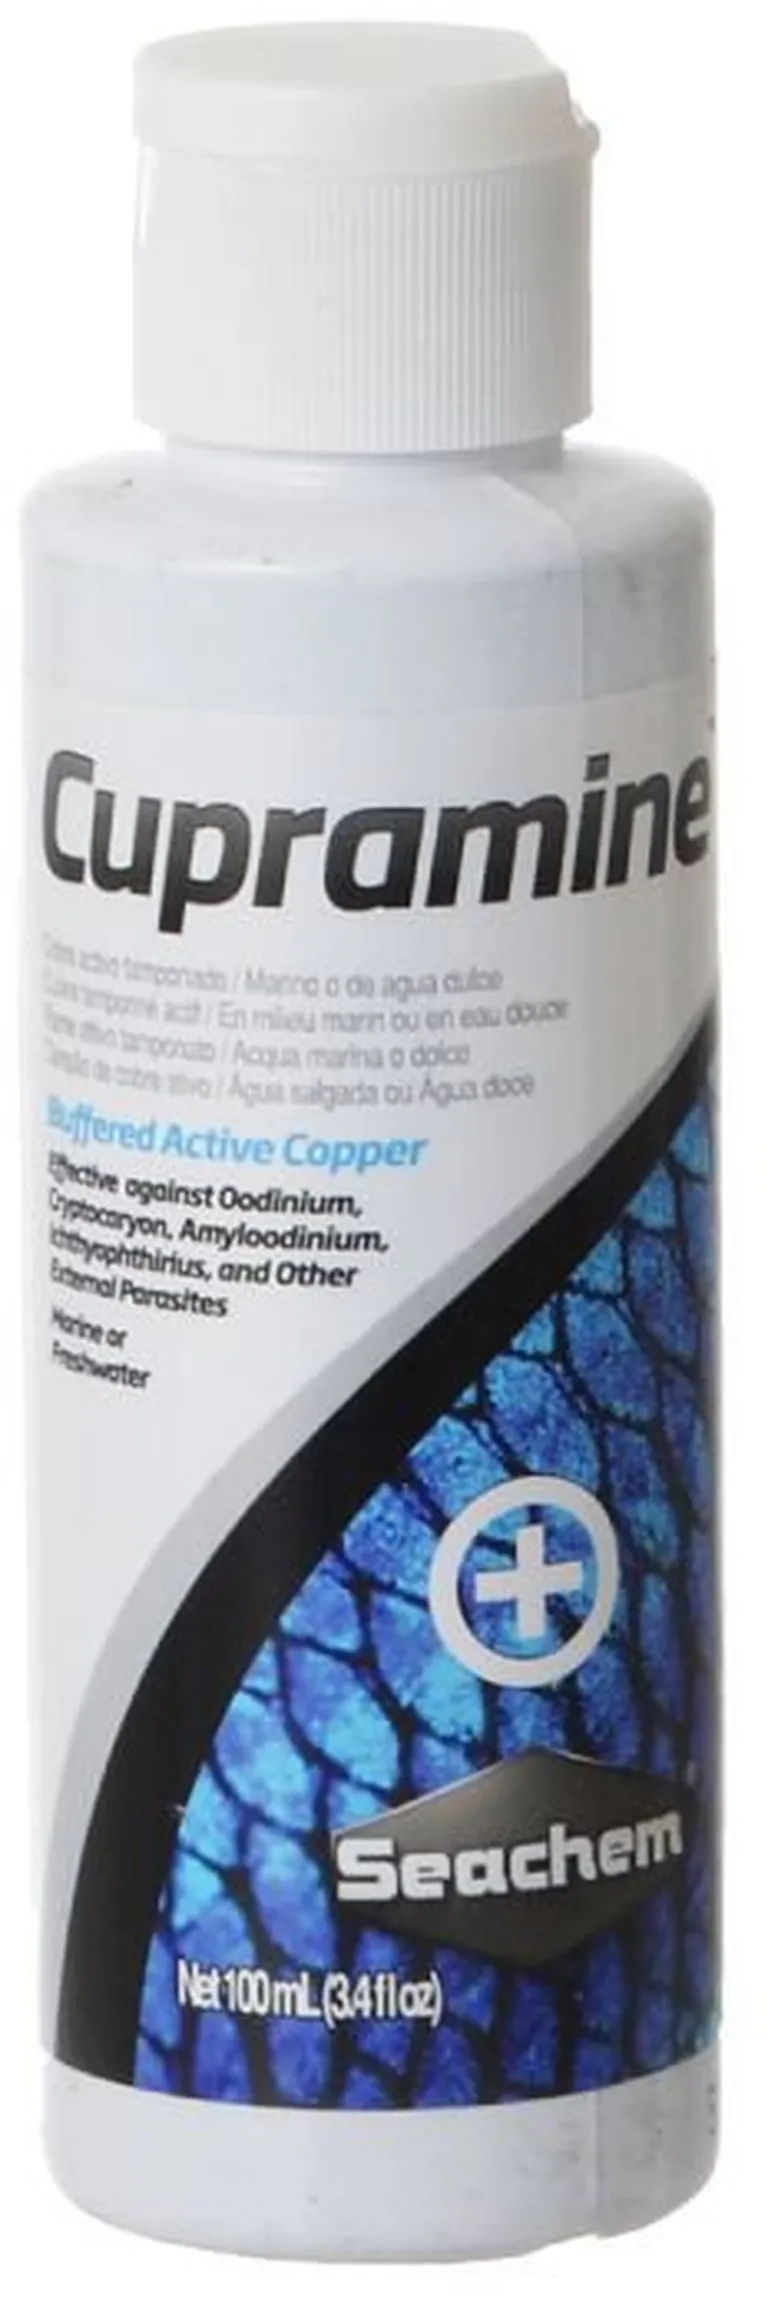 Seachem Cupramine Buffered Active Copper Effective Against External Parasites in Aquariums Photo 1